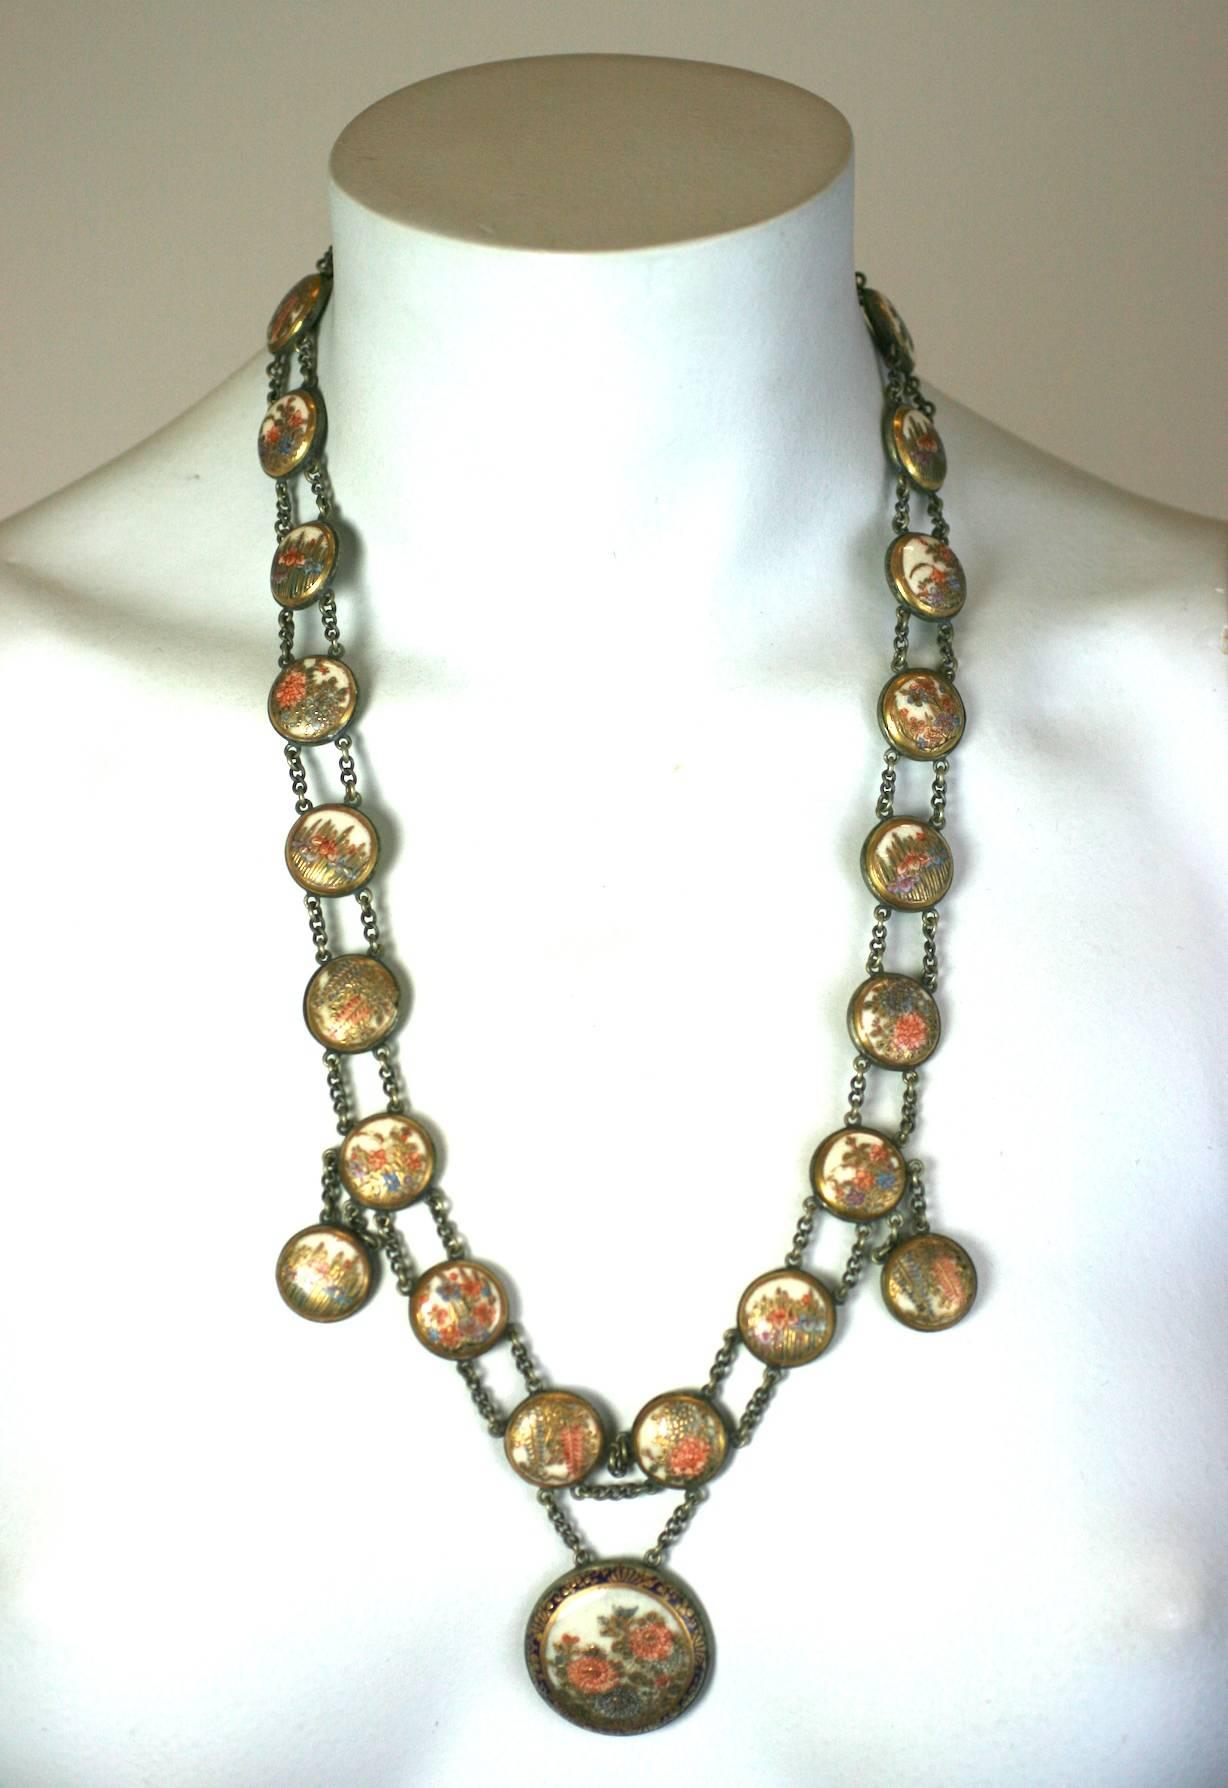 19th century necklace